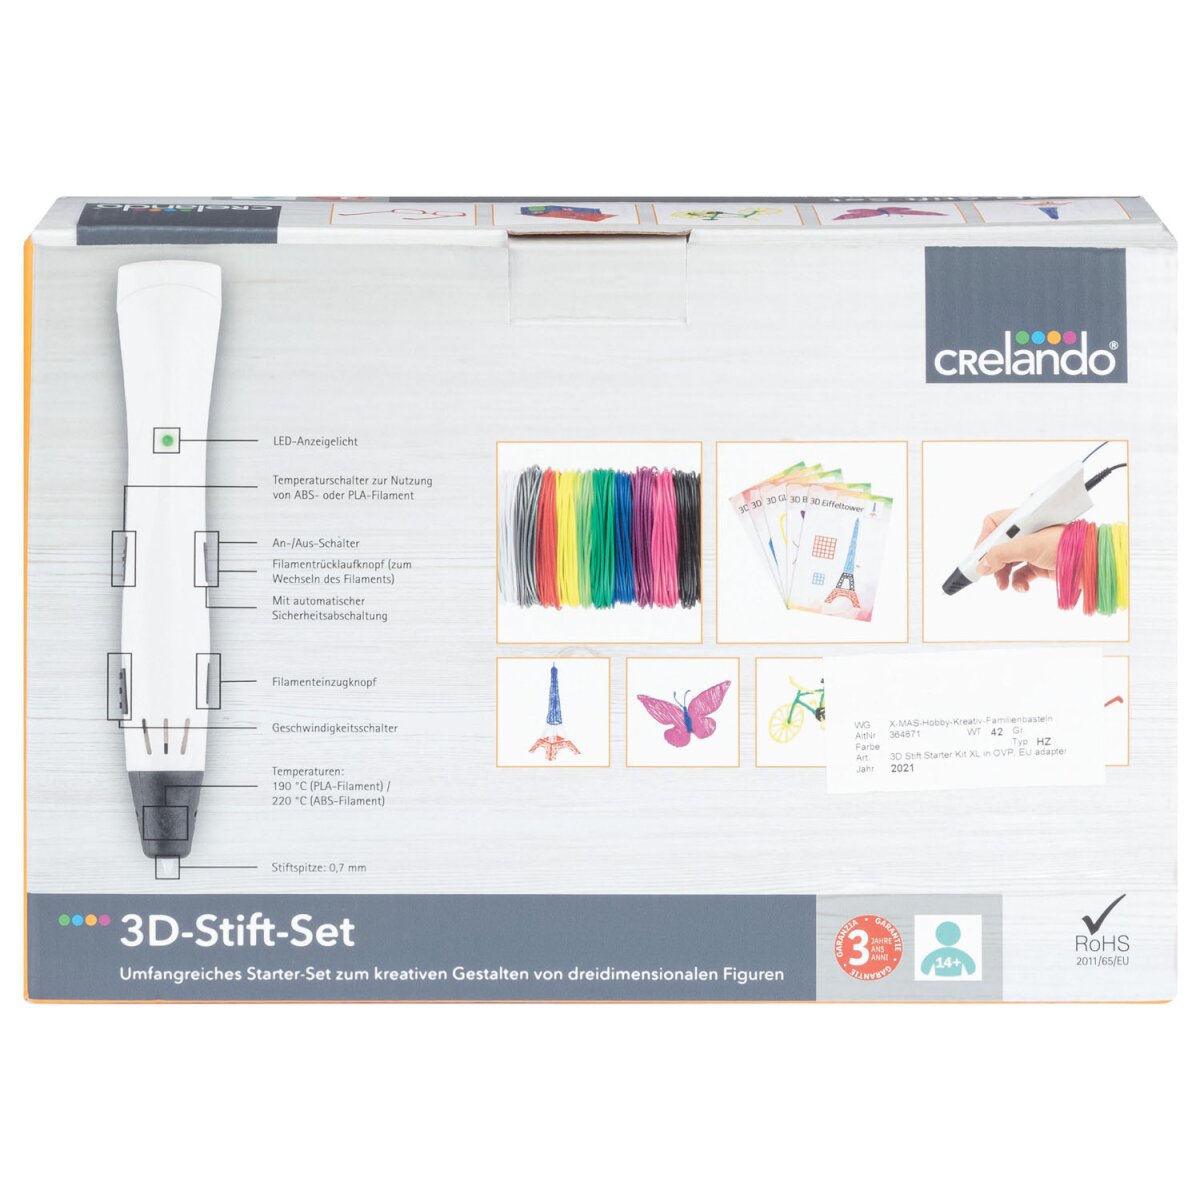 € 19-teilig Stift-Set, neuwertig, crelando® B-Ware - 22,99 3D